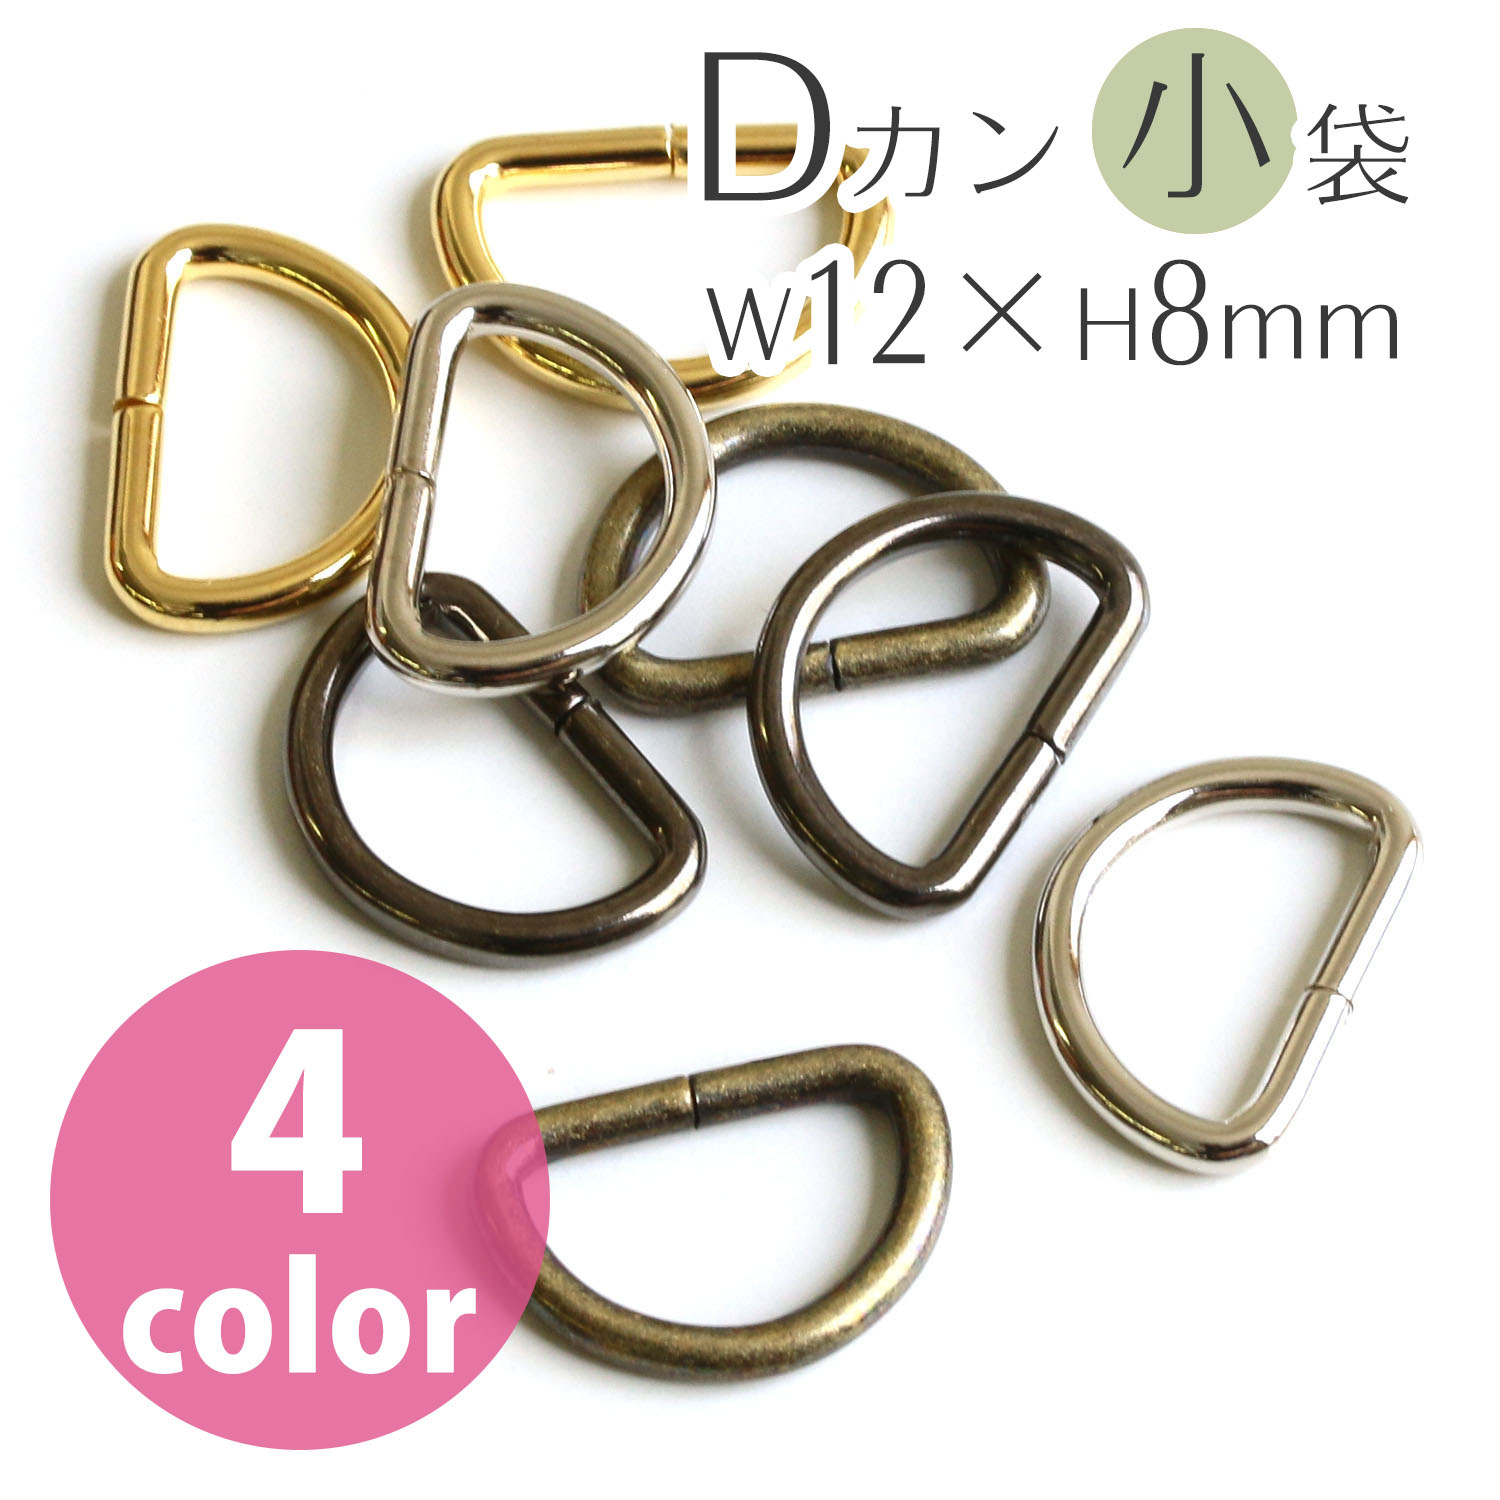 S22 D-Ring  12 x 8mm"", diameter 2mm  (bag)